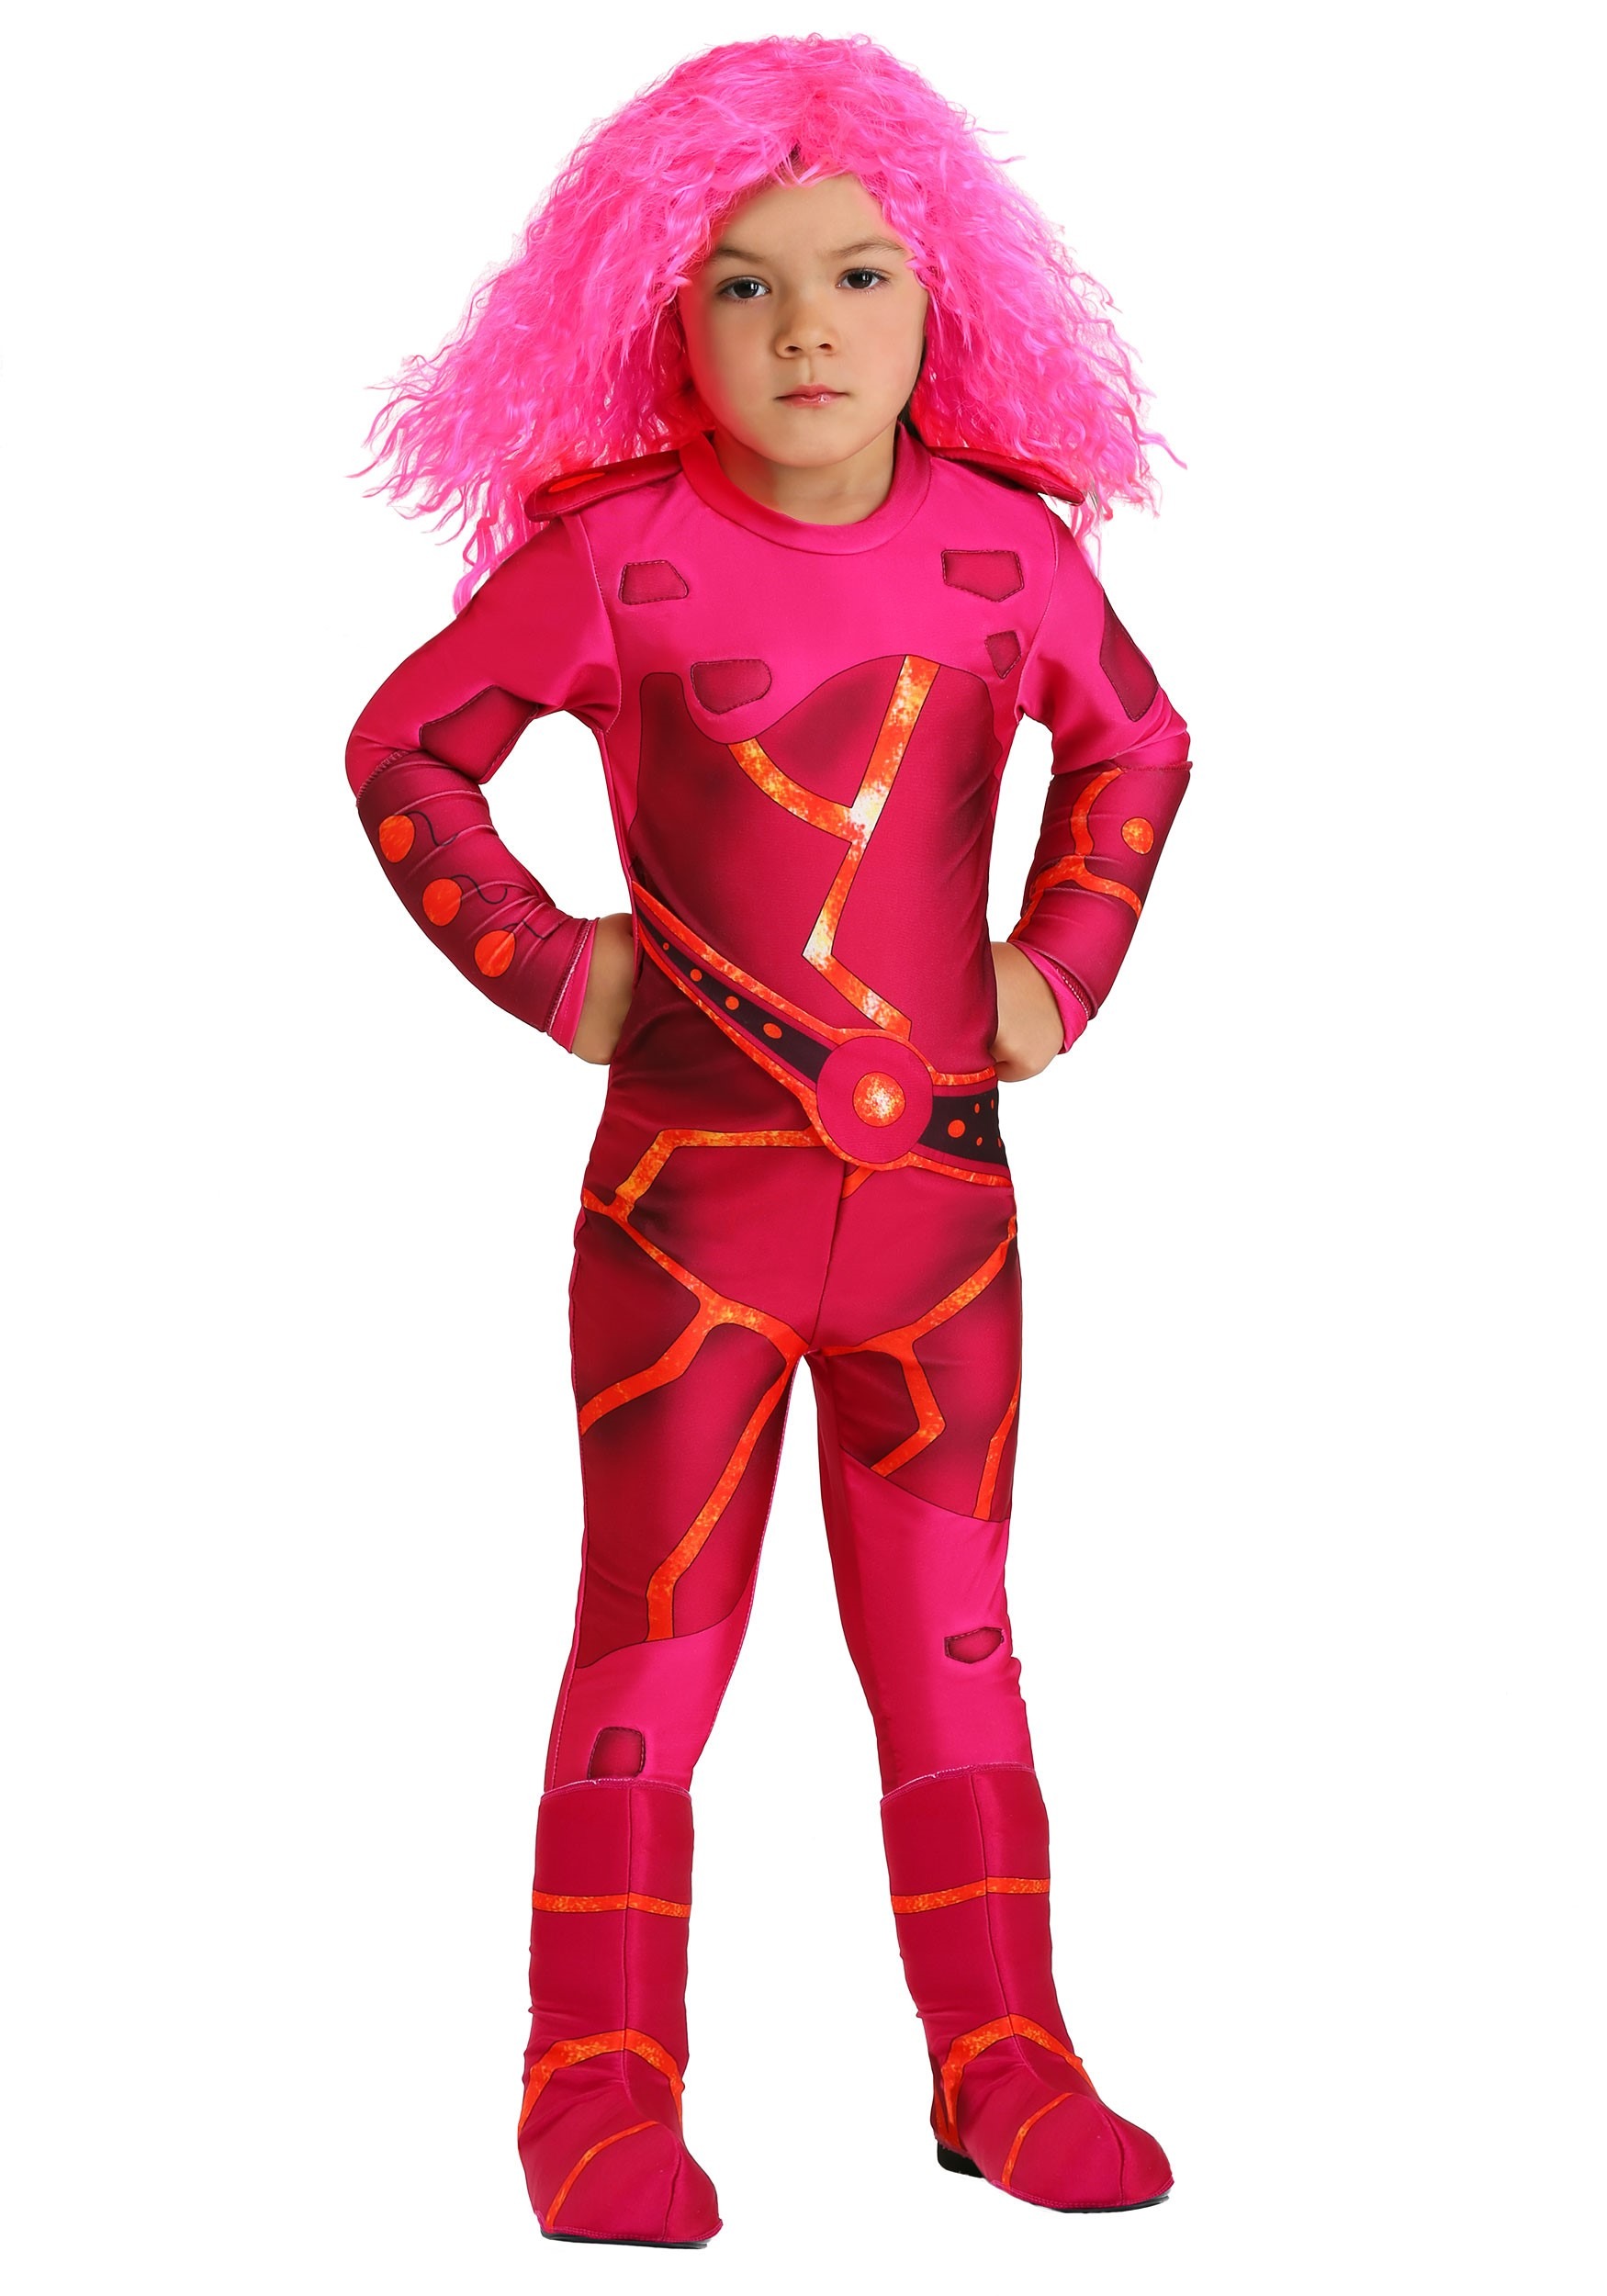 Lavagirl Costume for Little Kids